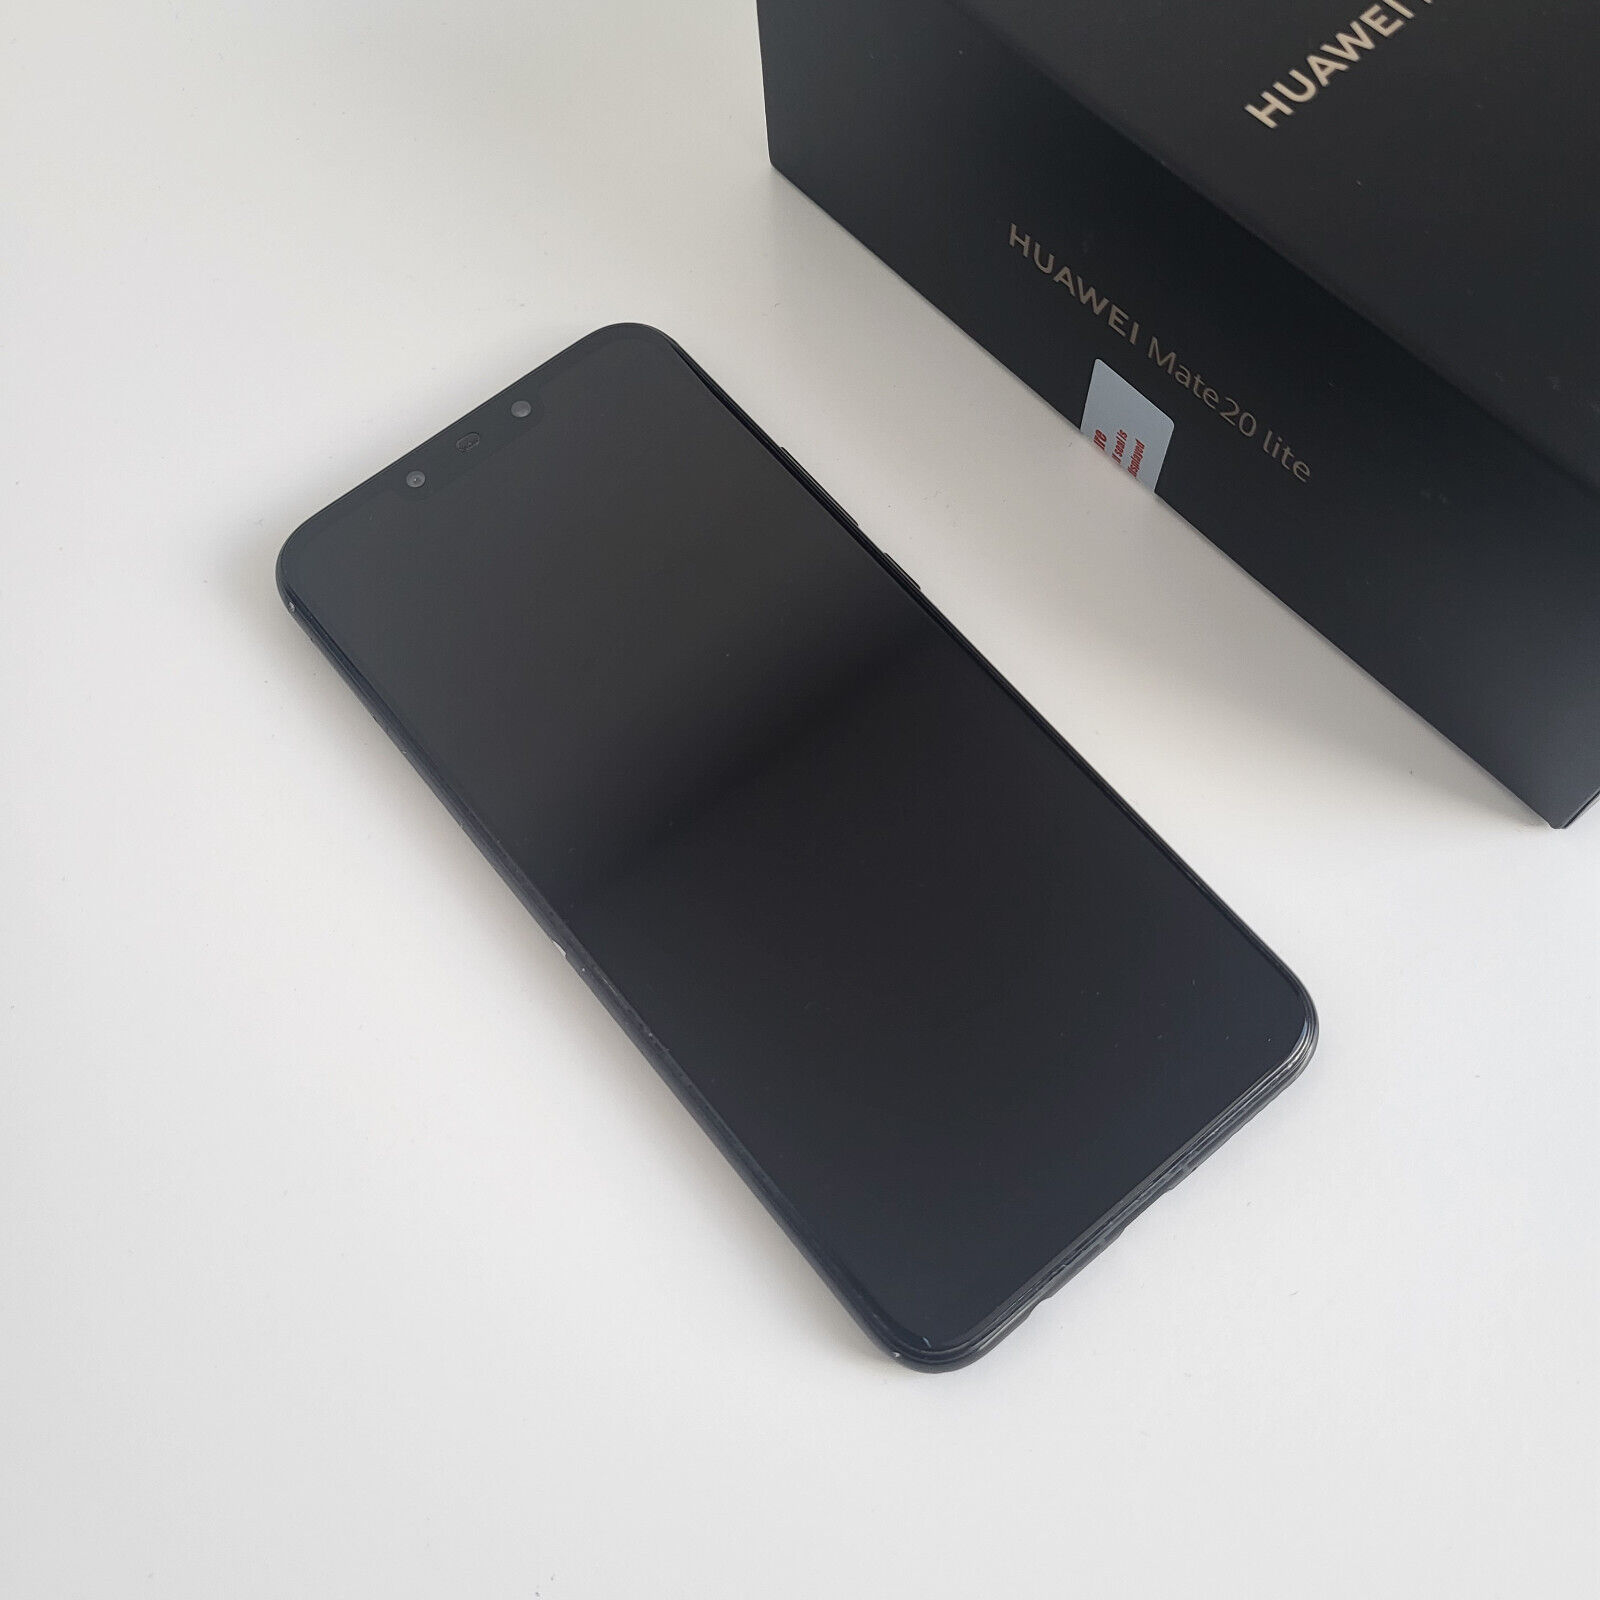 Huawei Mate 20 Lite 64GB Siyah 4GB RAM Android Kilidi Açılmış Sürüm Akıllı Telefon Çift Sim Kart